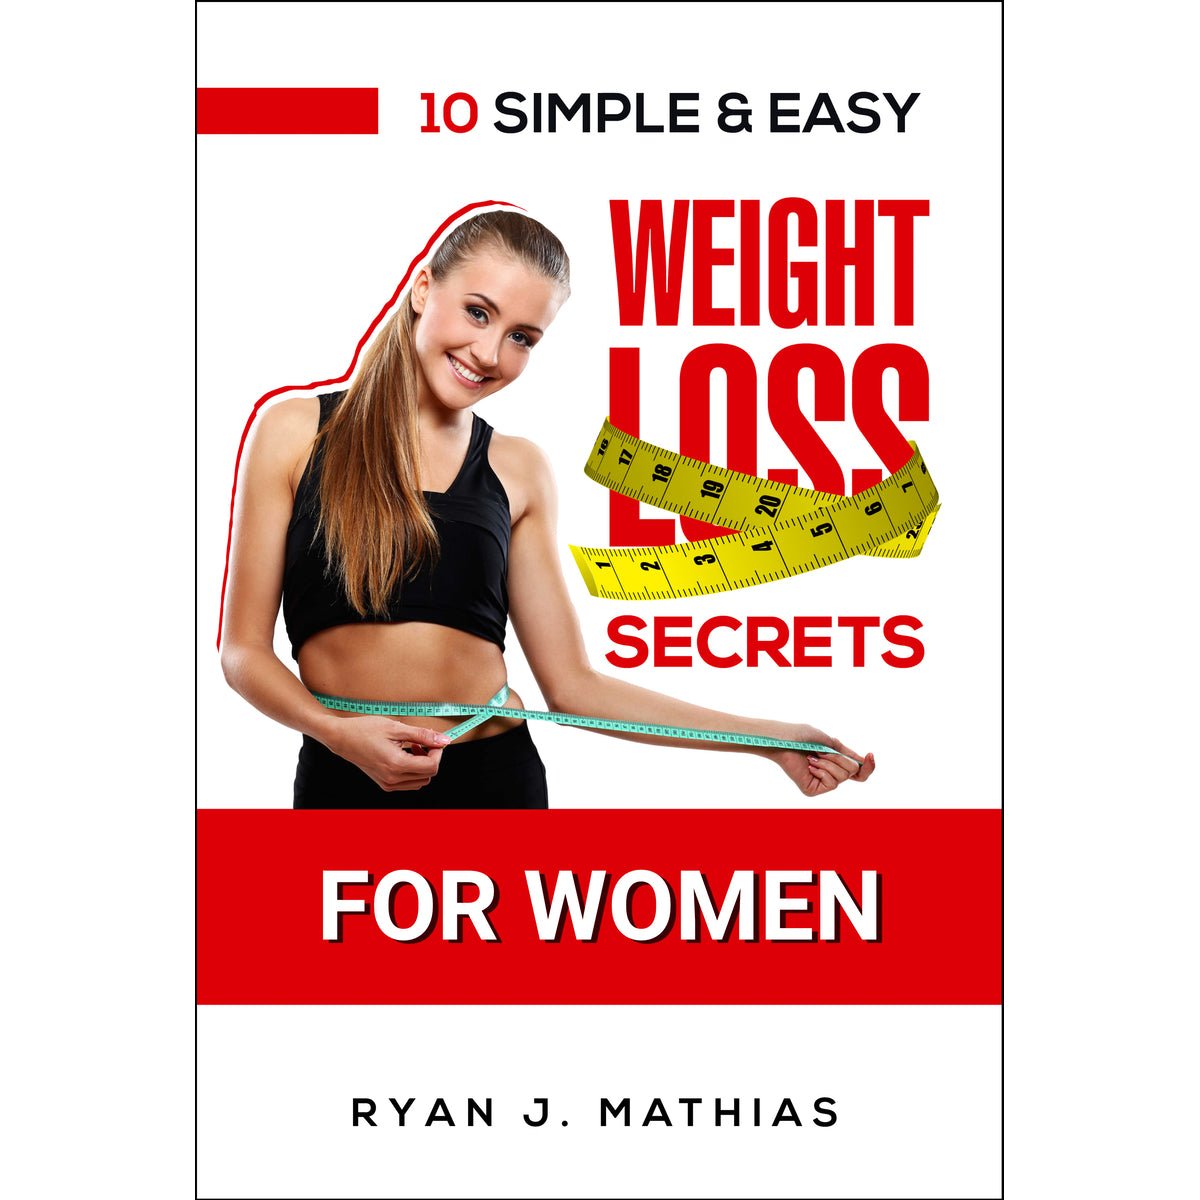 Weight Loss Secrets Guide For Women - Strength World